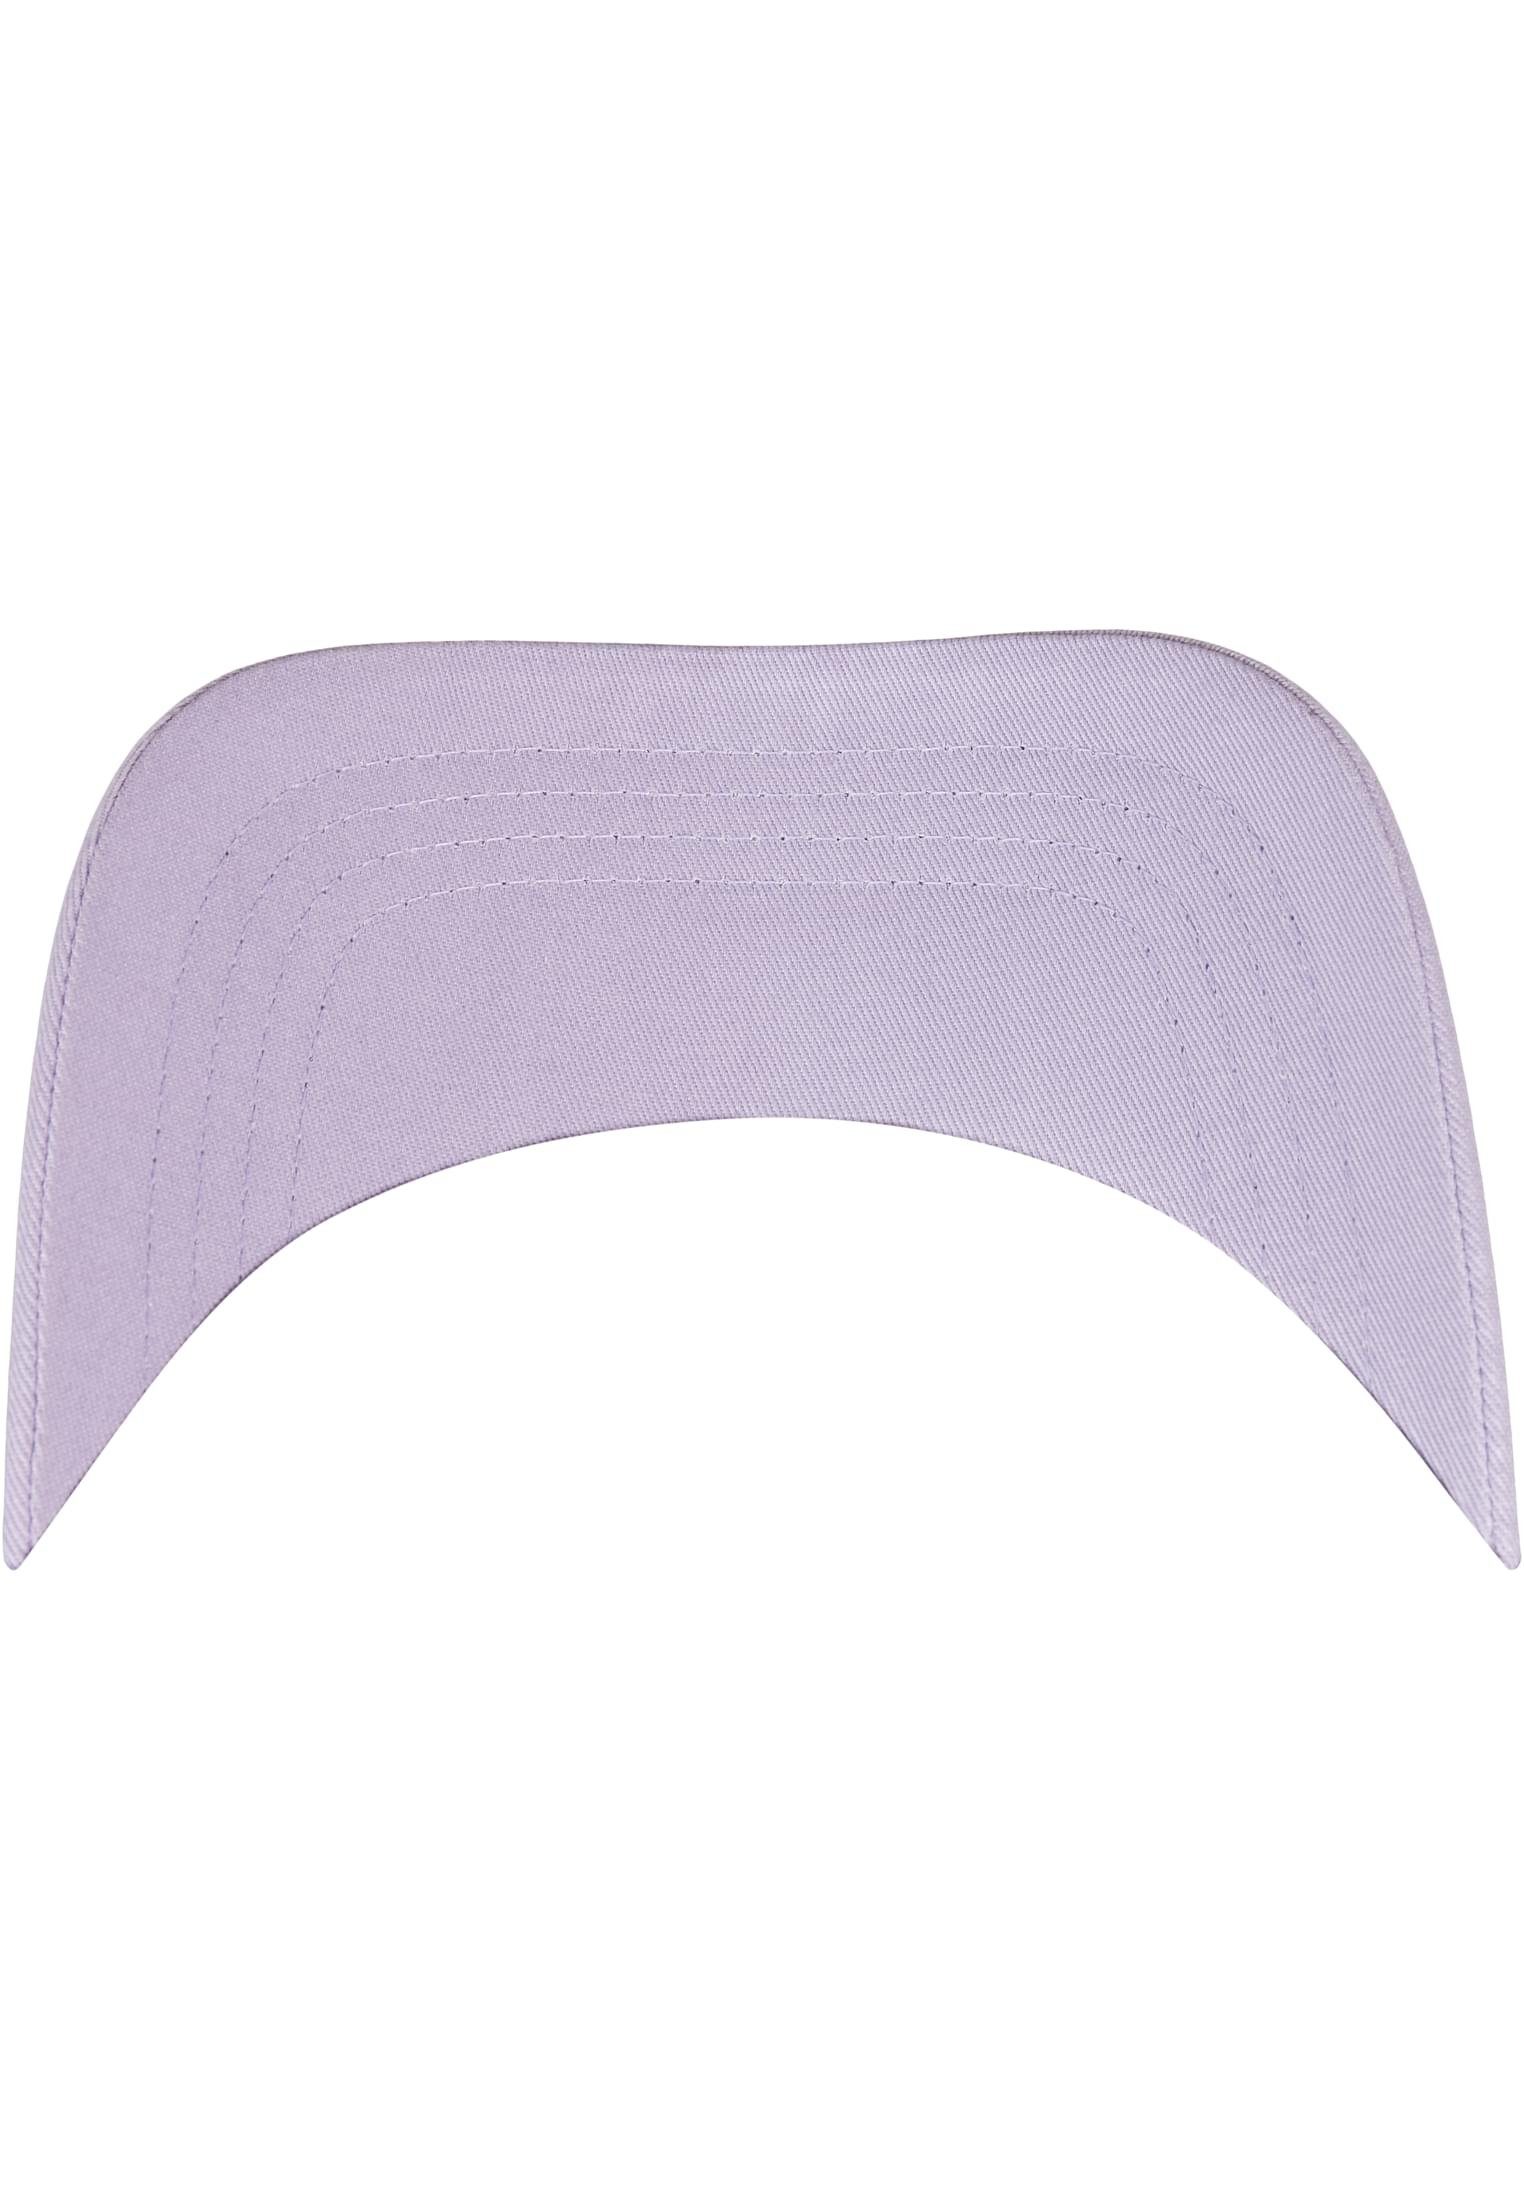 Flexfit Flex Cap Accessoires Curved Cap Visor lilac